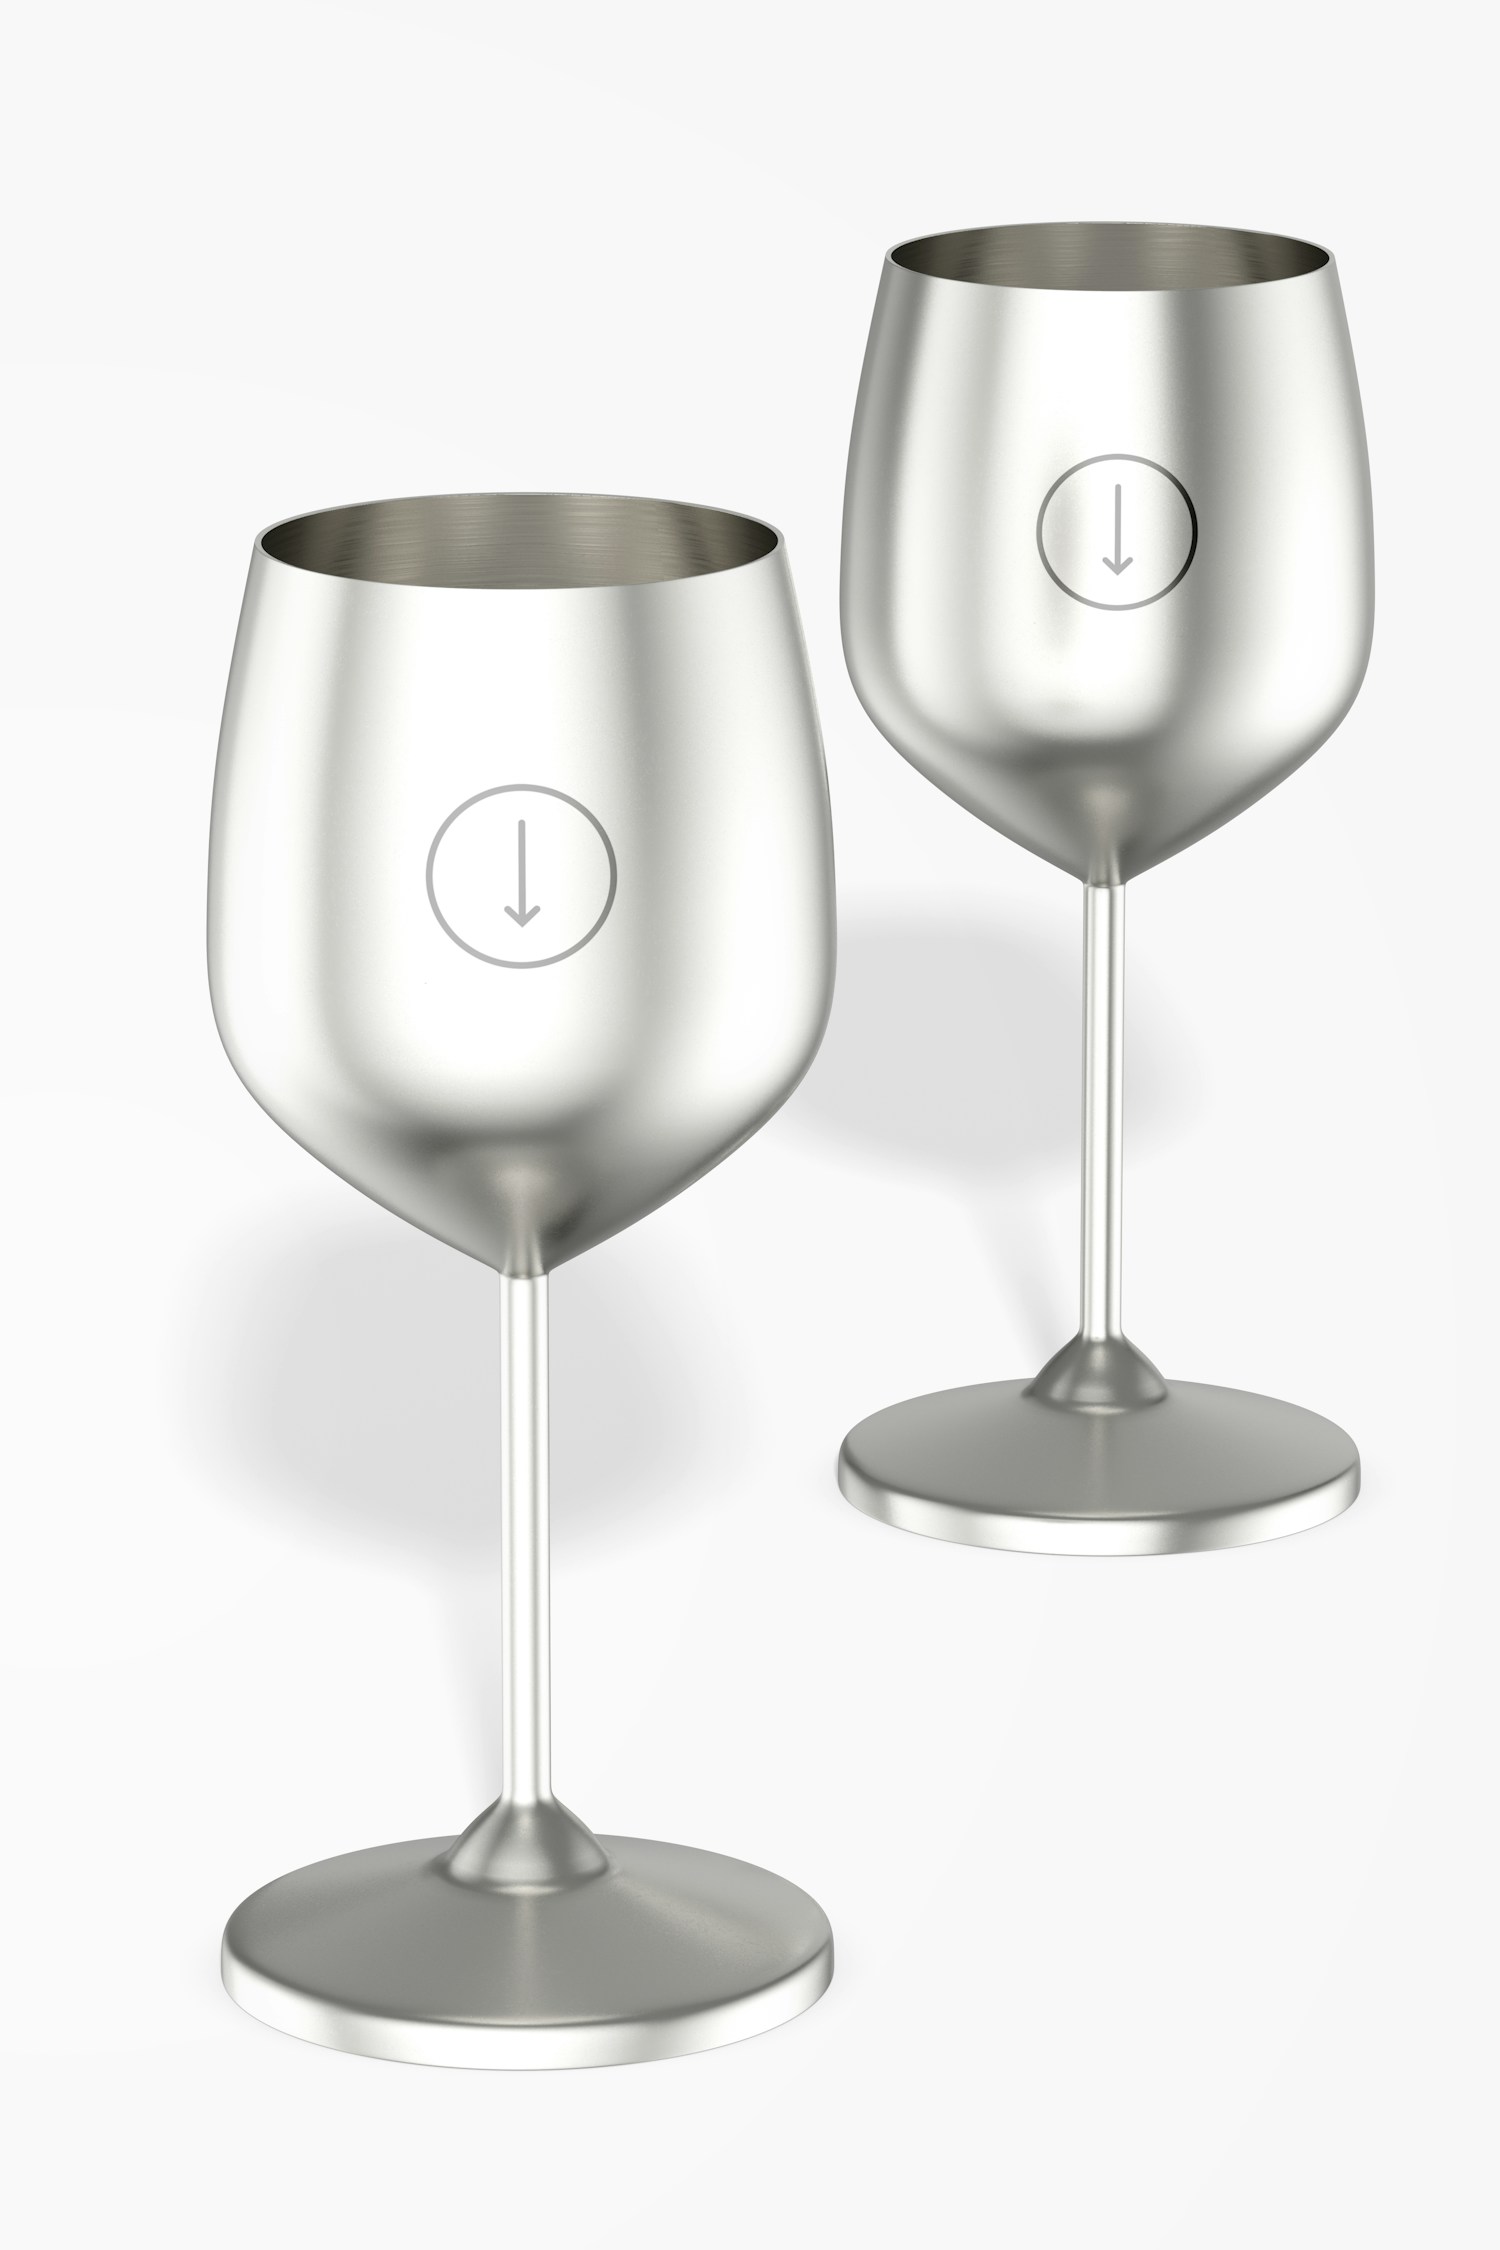 Stainless Steel Wine Glasses Mockup